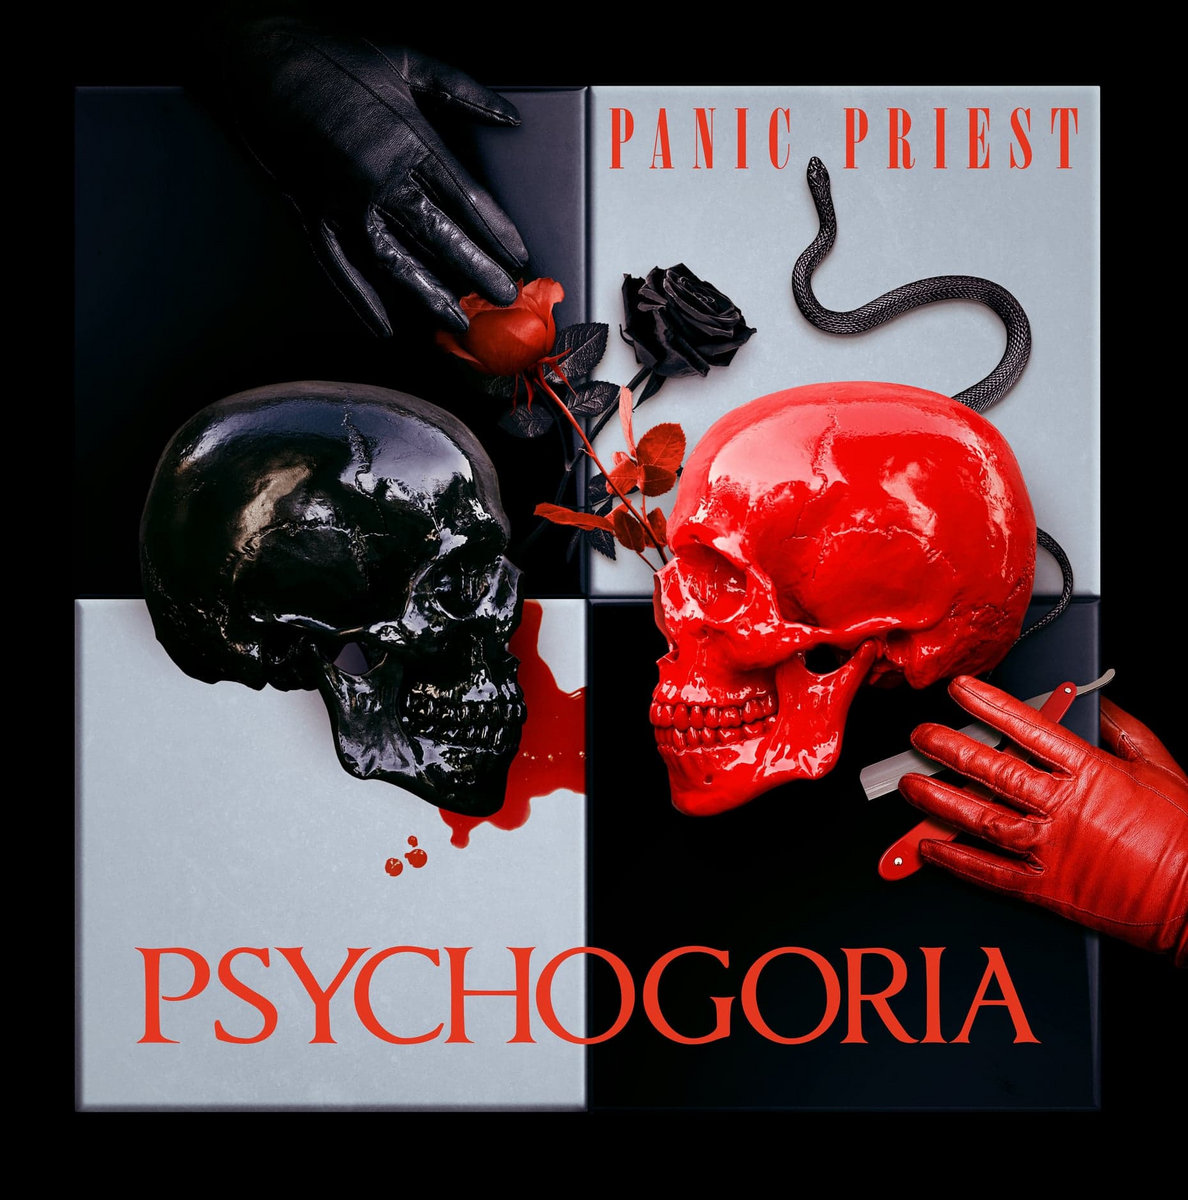 Panic Priest, “Psychogoria”